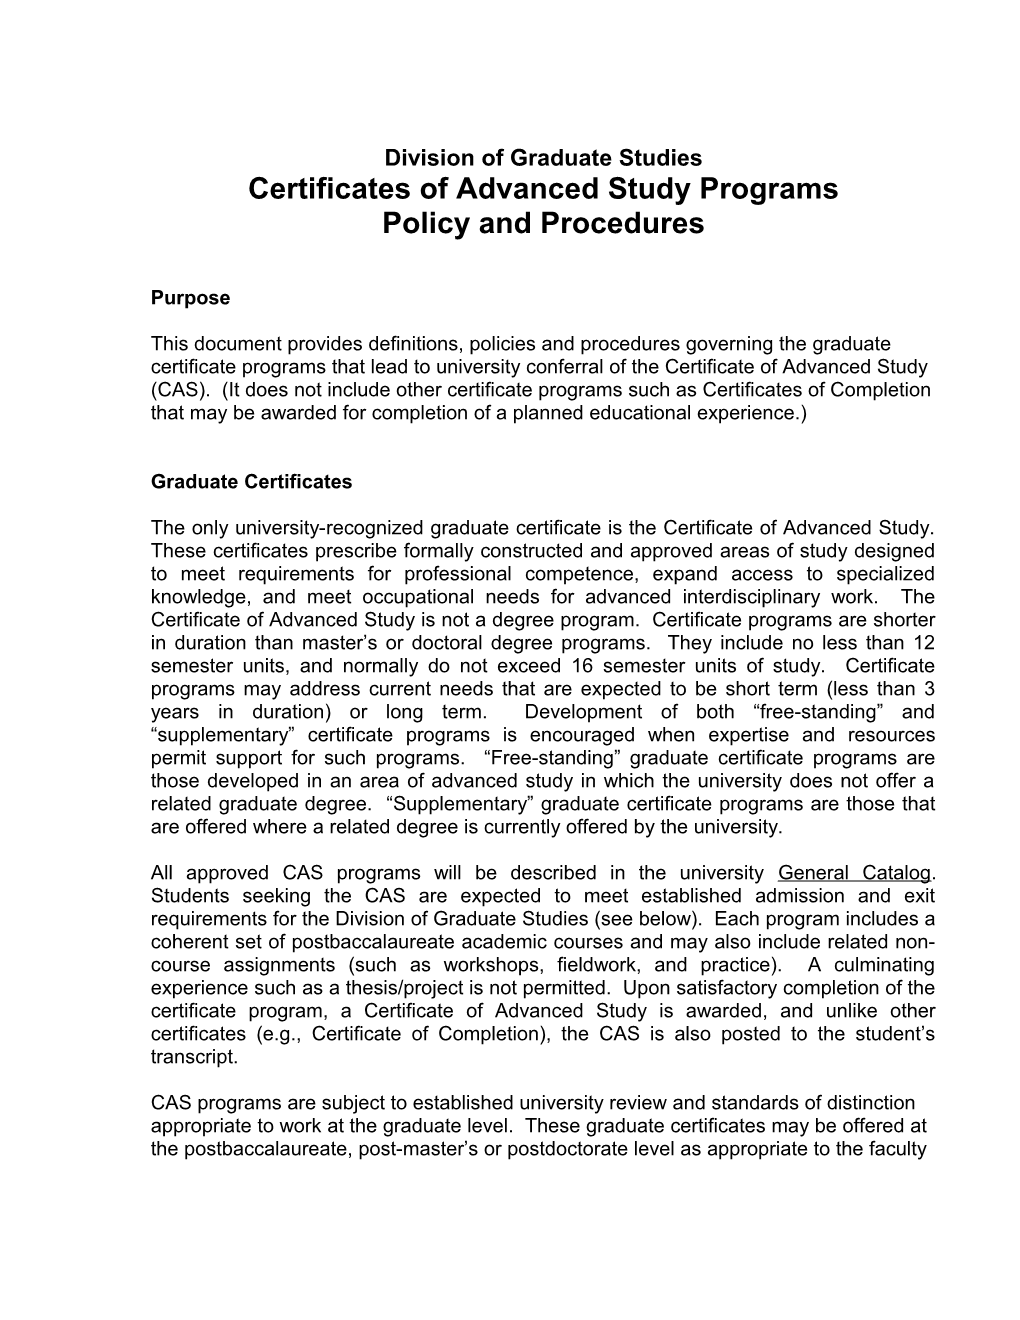 Certificate of Advanced Study